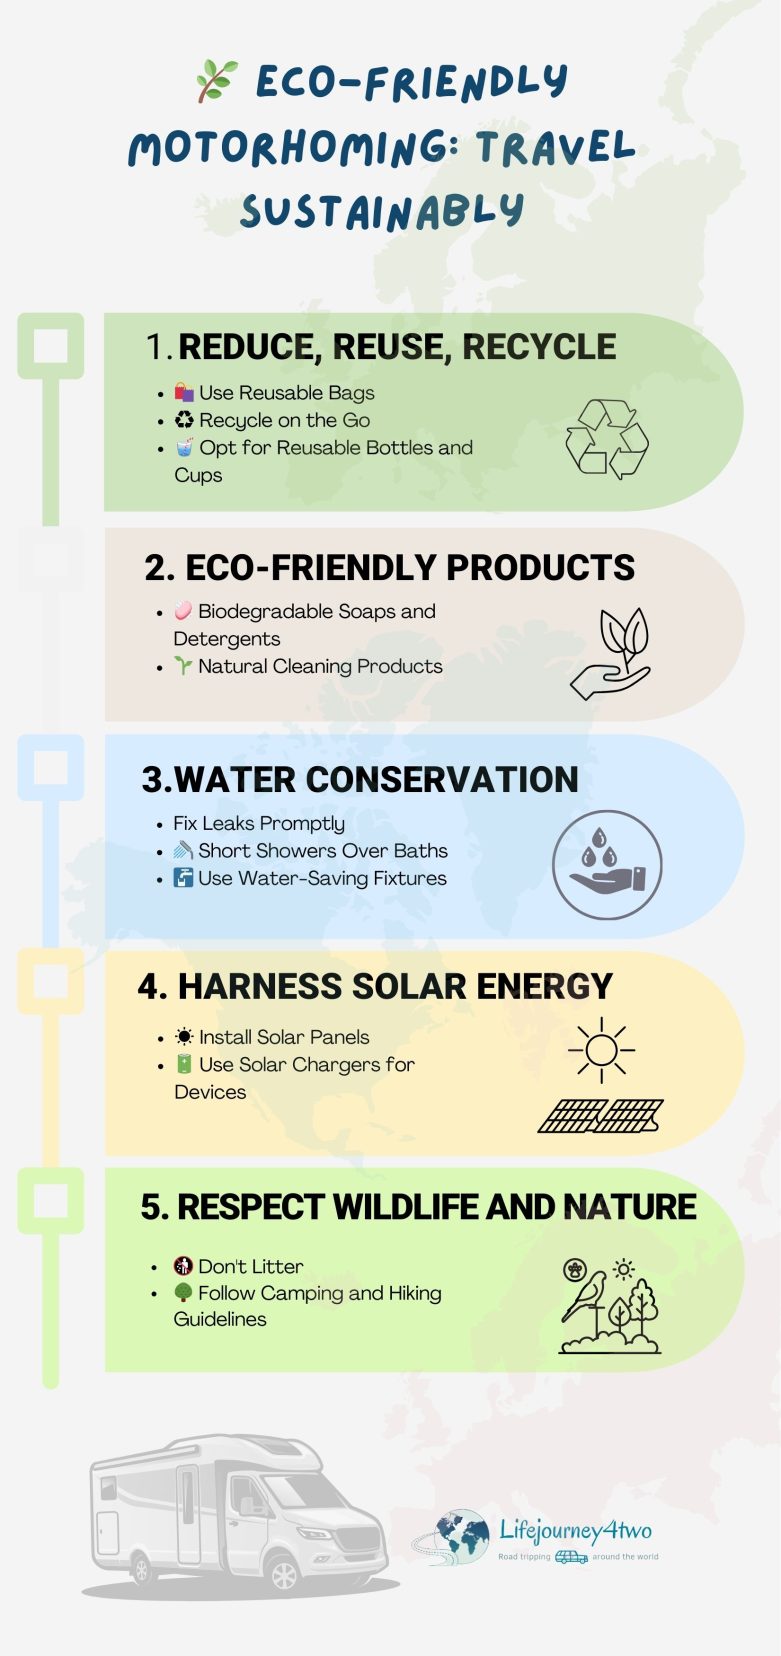 Eco-friendly motohoming checklist infographic